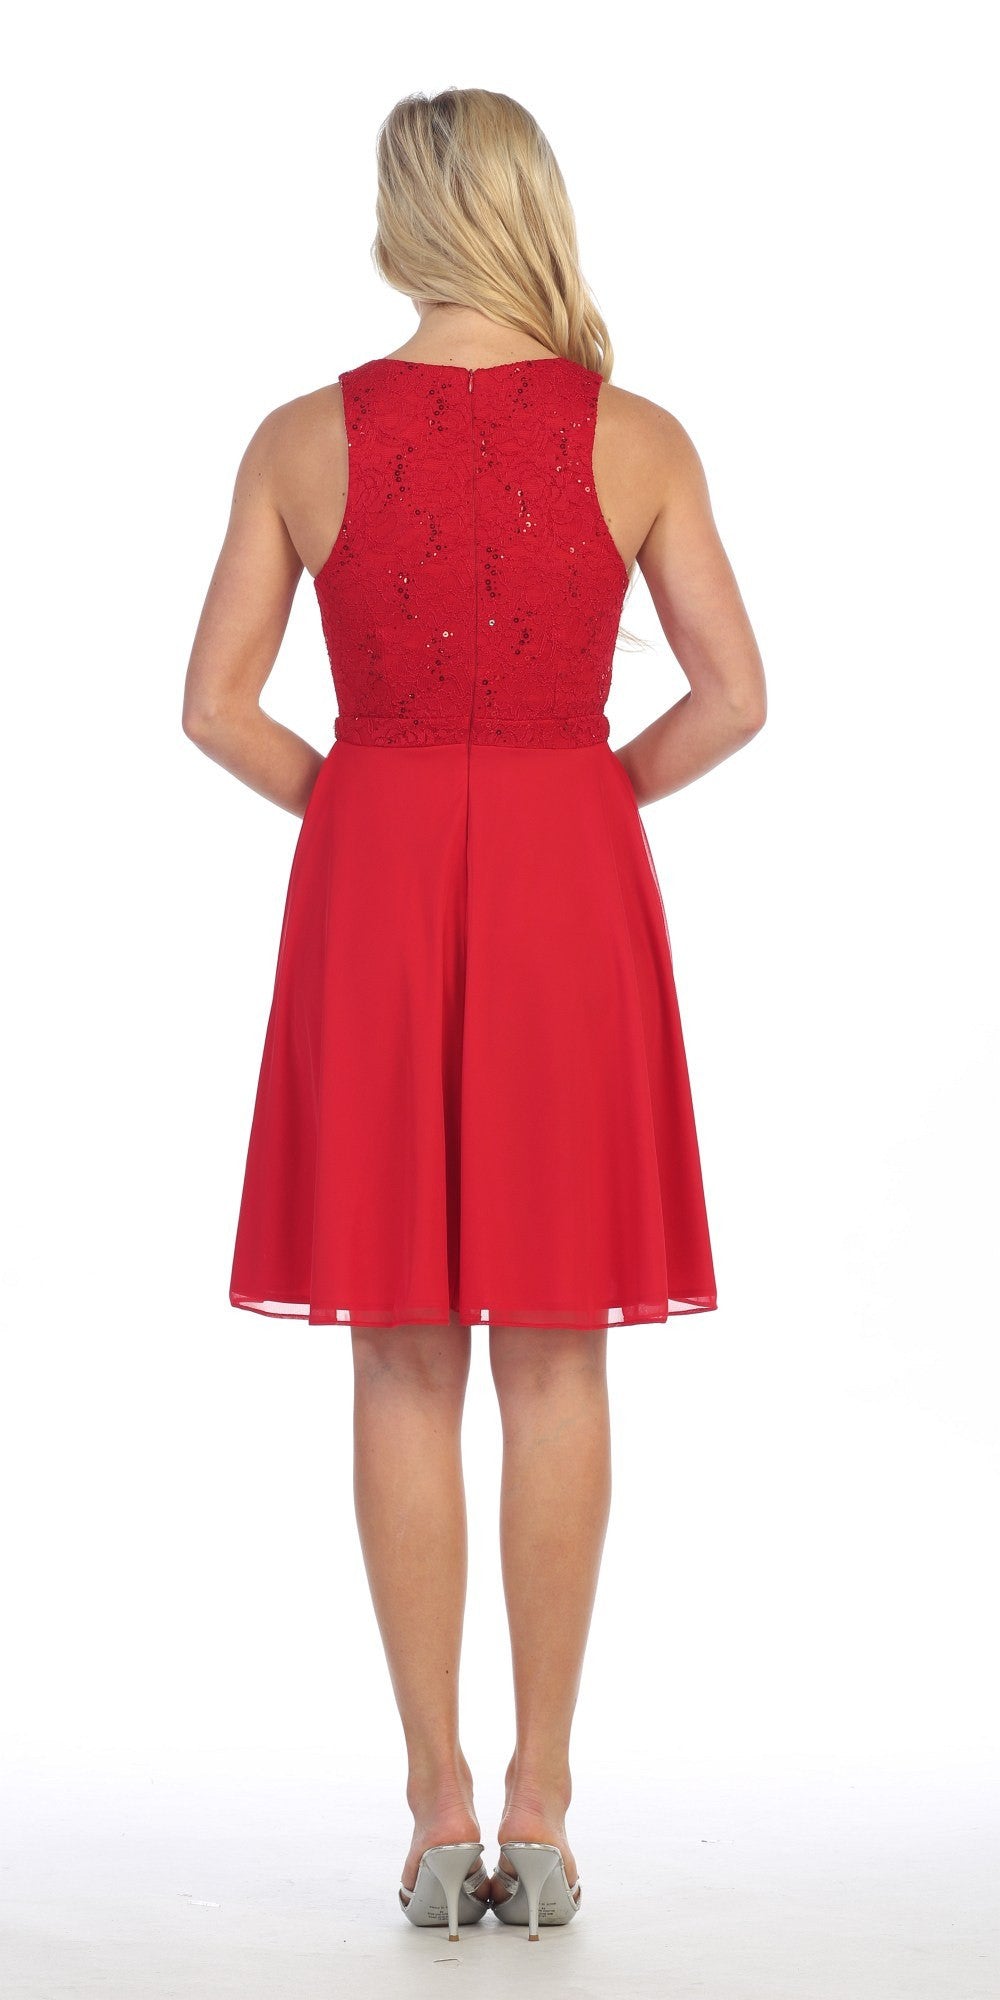 Red Lace Bodice Sleeveless Short Cocktail Dress Embellished Waist Discountdressshop 5033